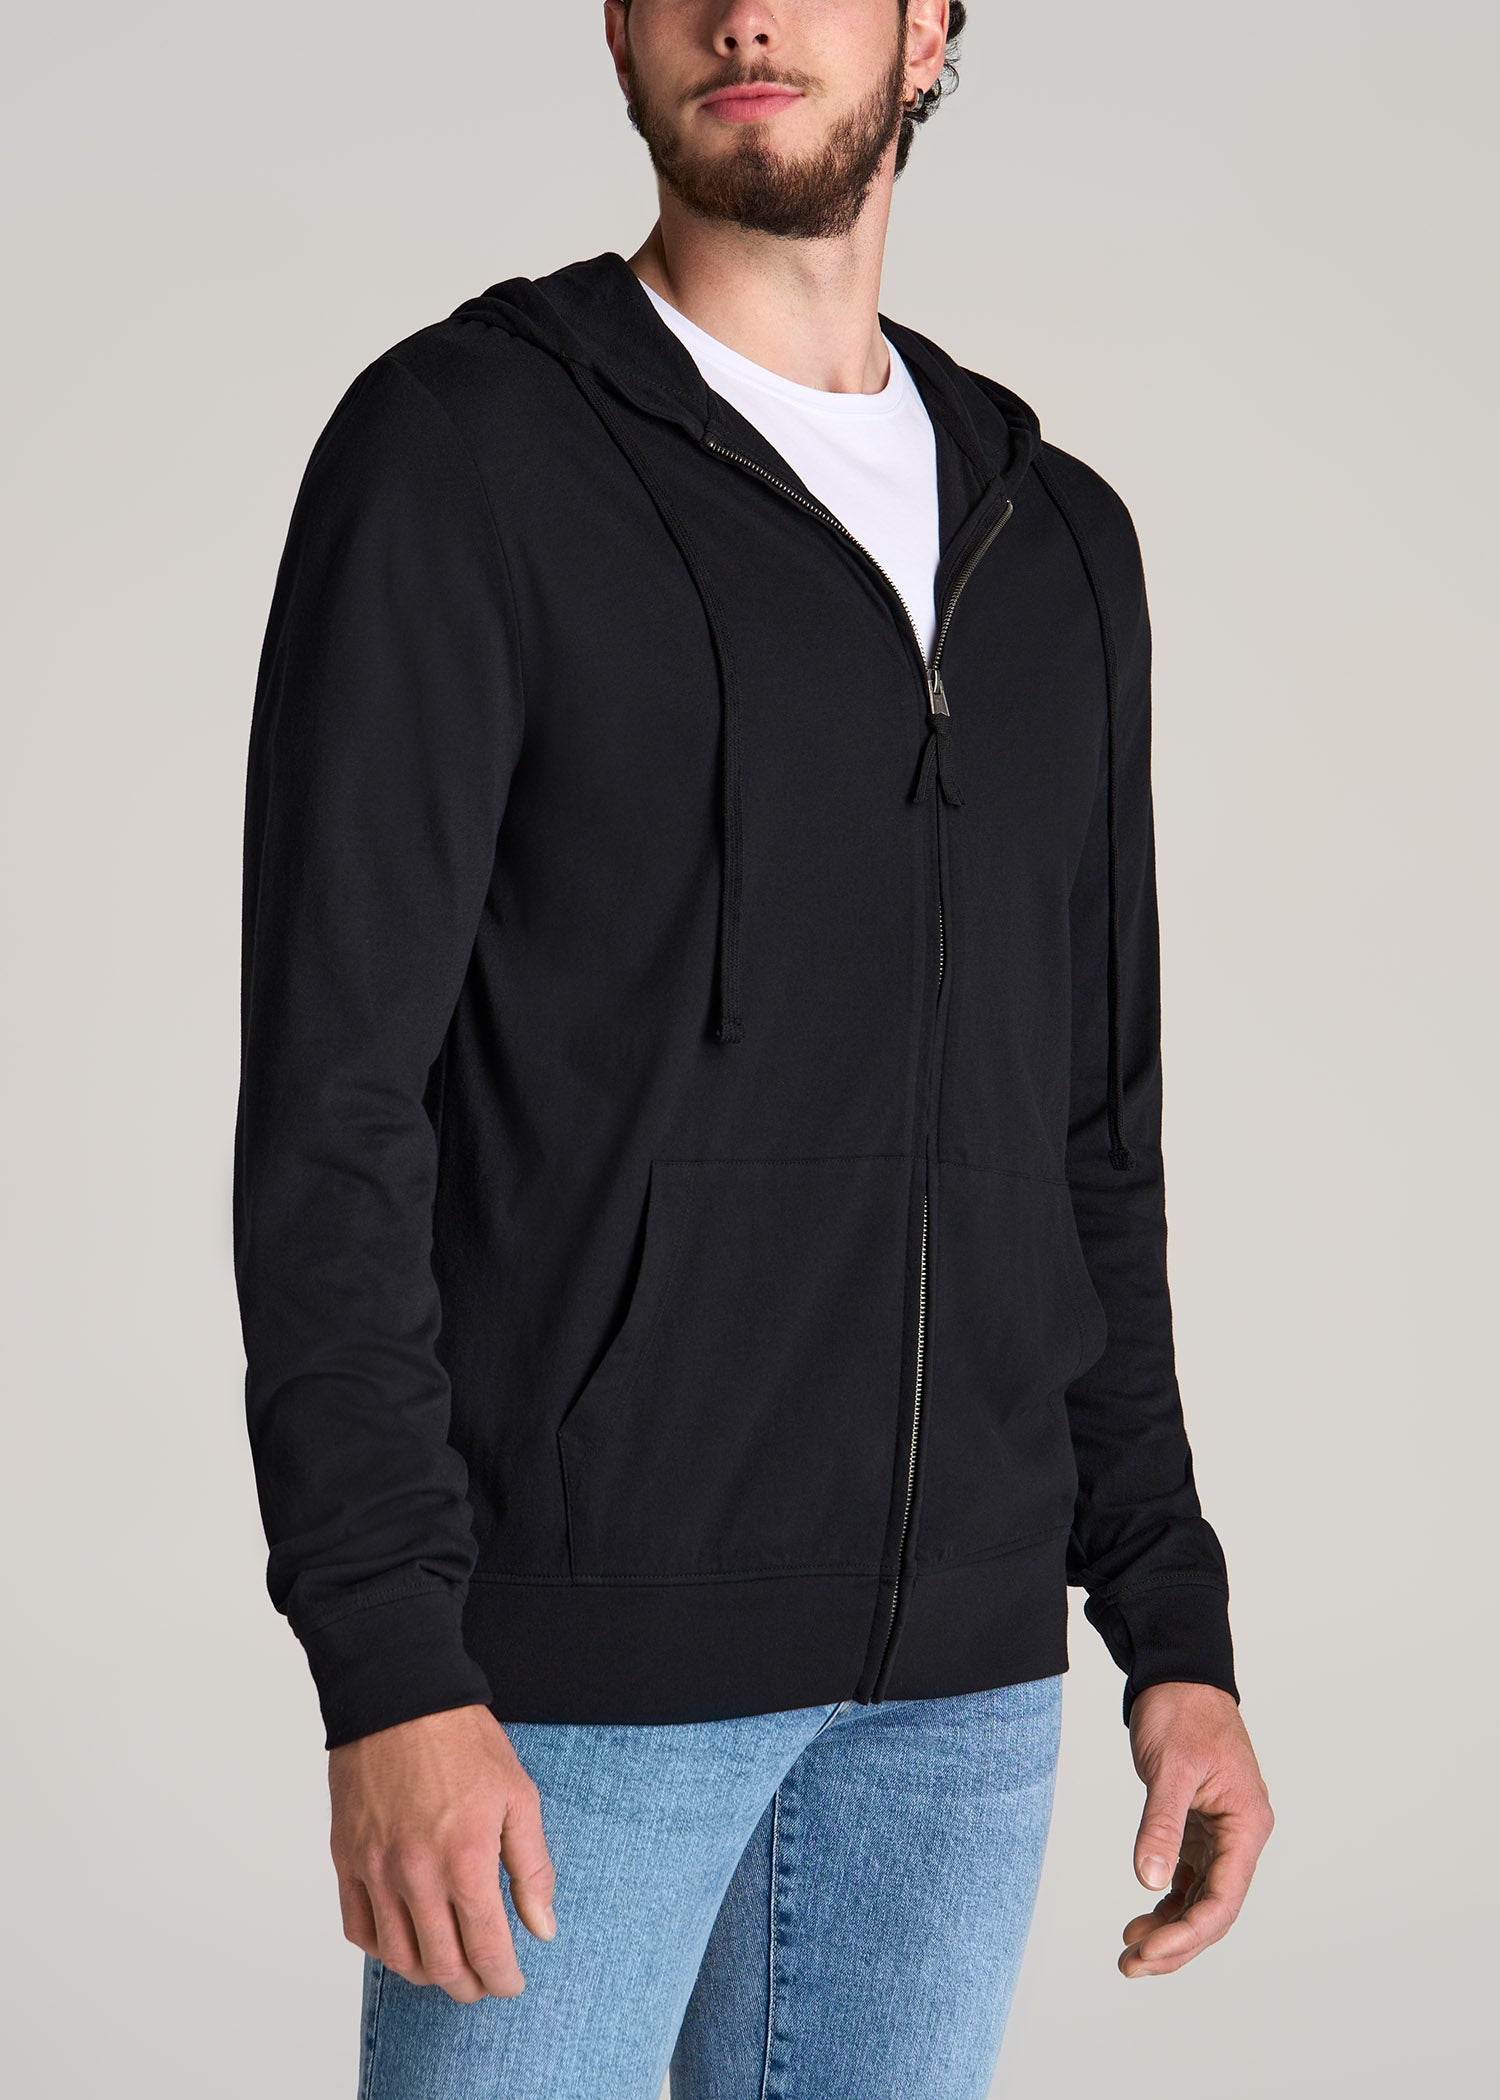 Long Sleeve Full Zip Jersey Hoodie for Tall Men in Black